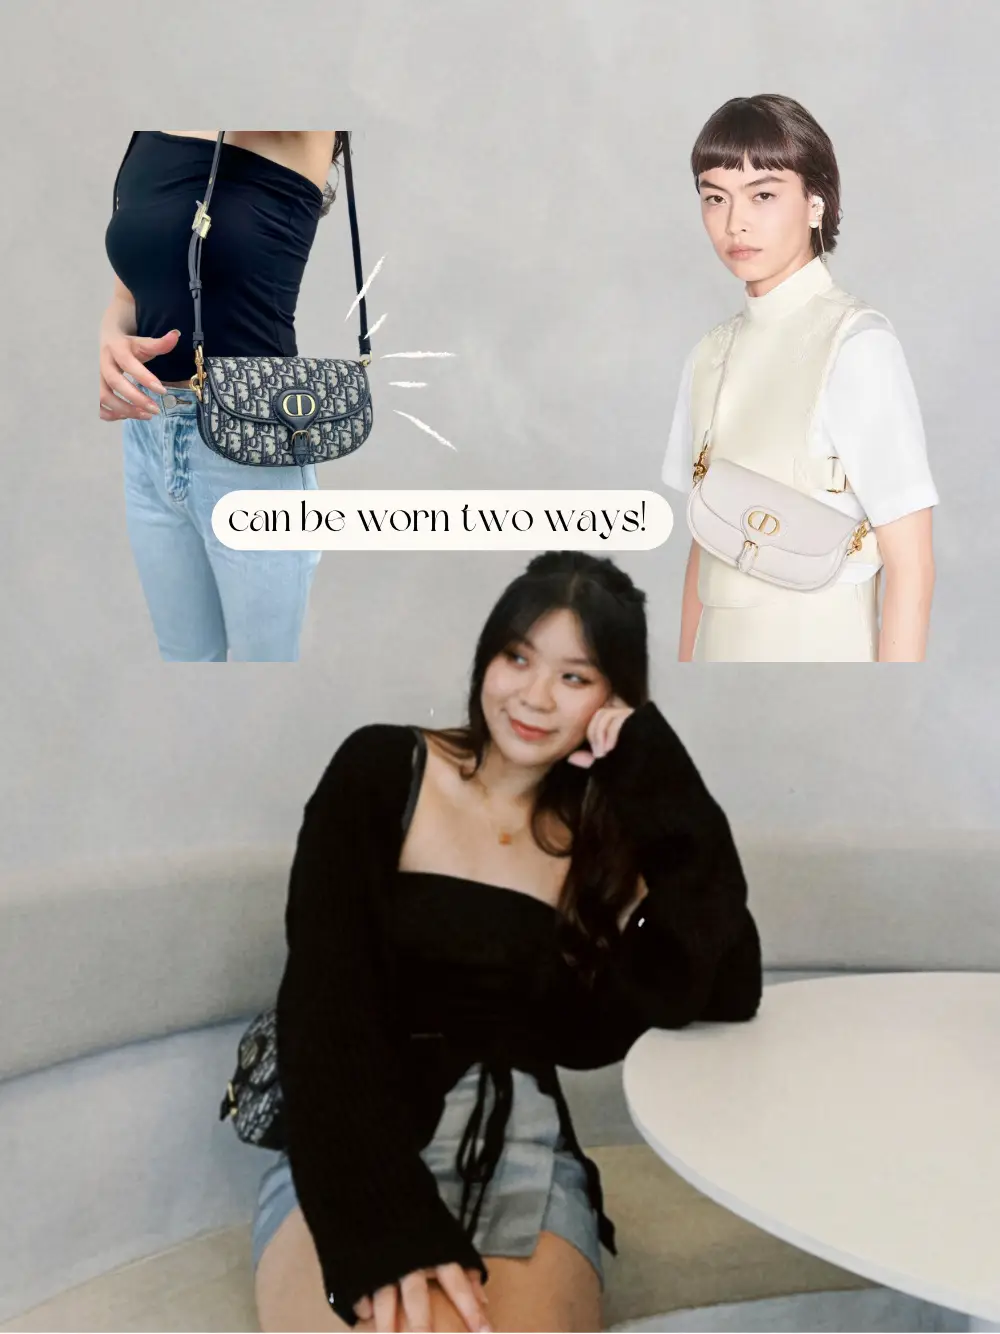 Bag Talk: Dior Bobby